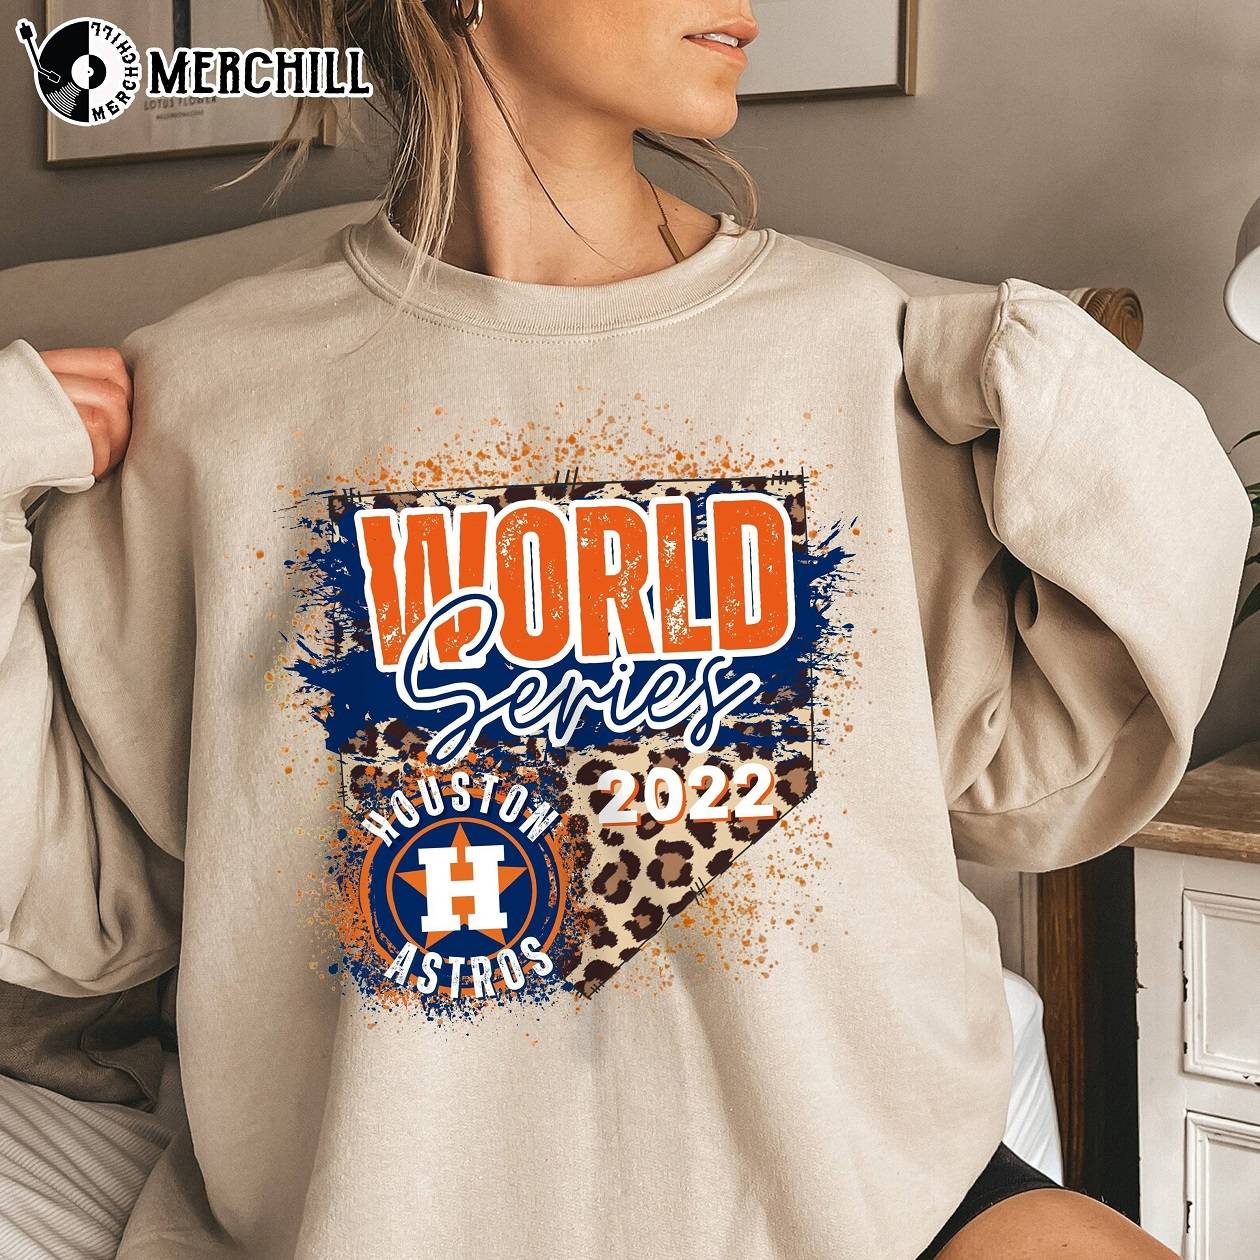 astros world series womens shirts